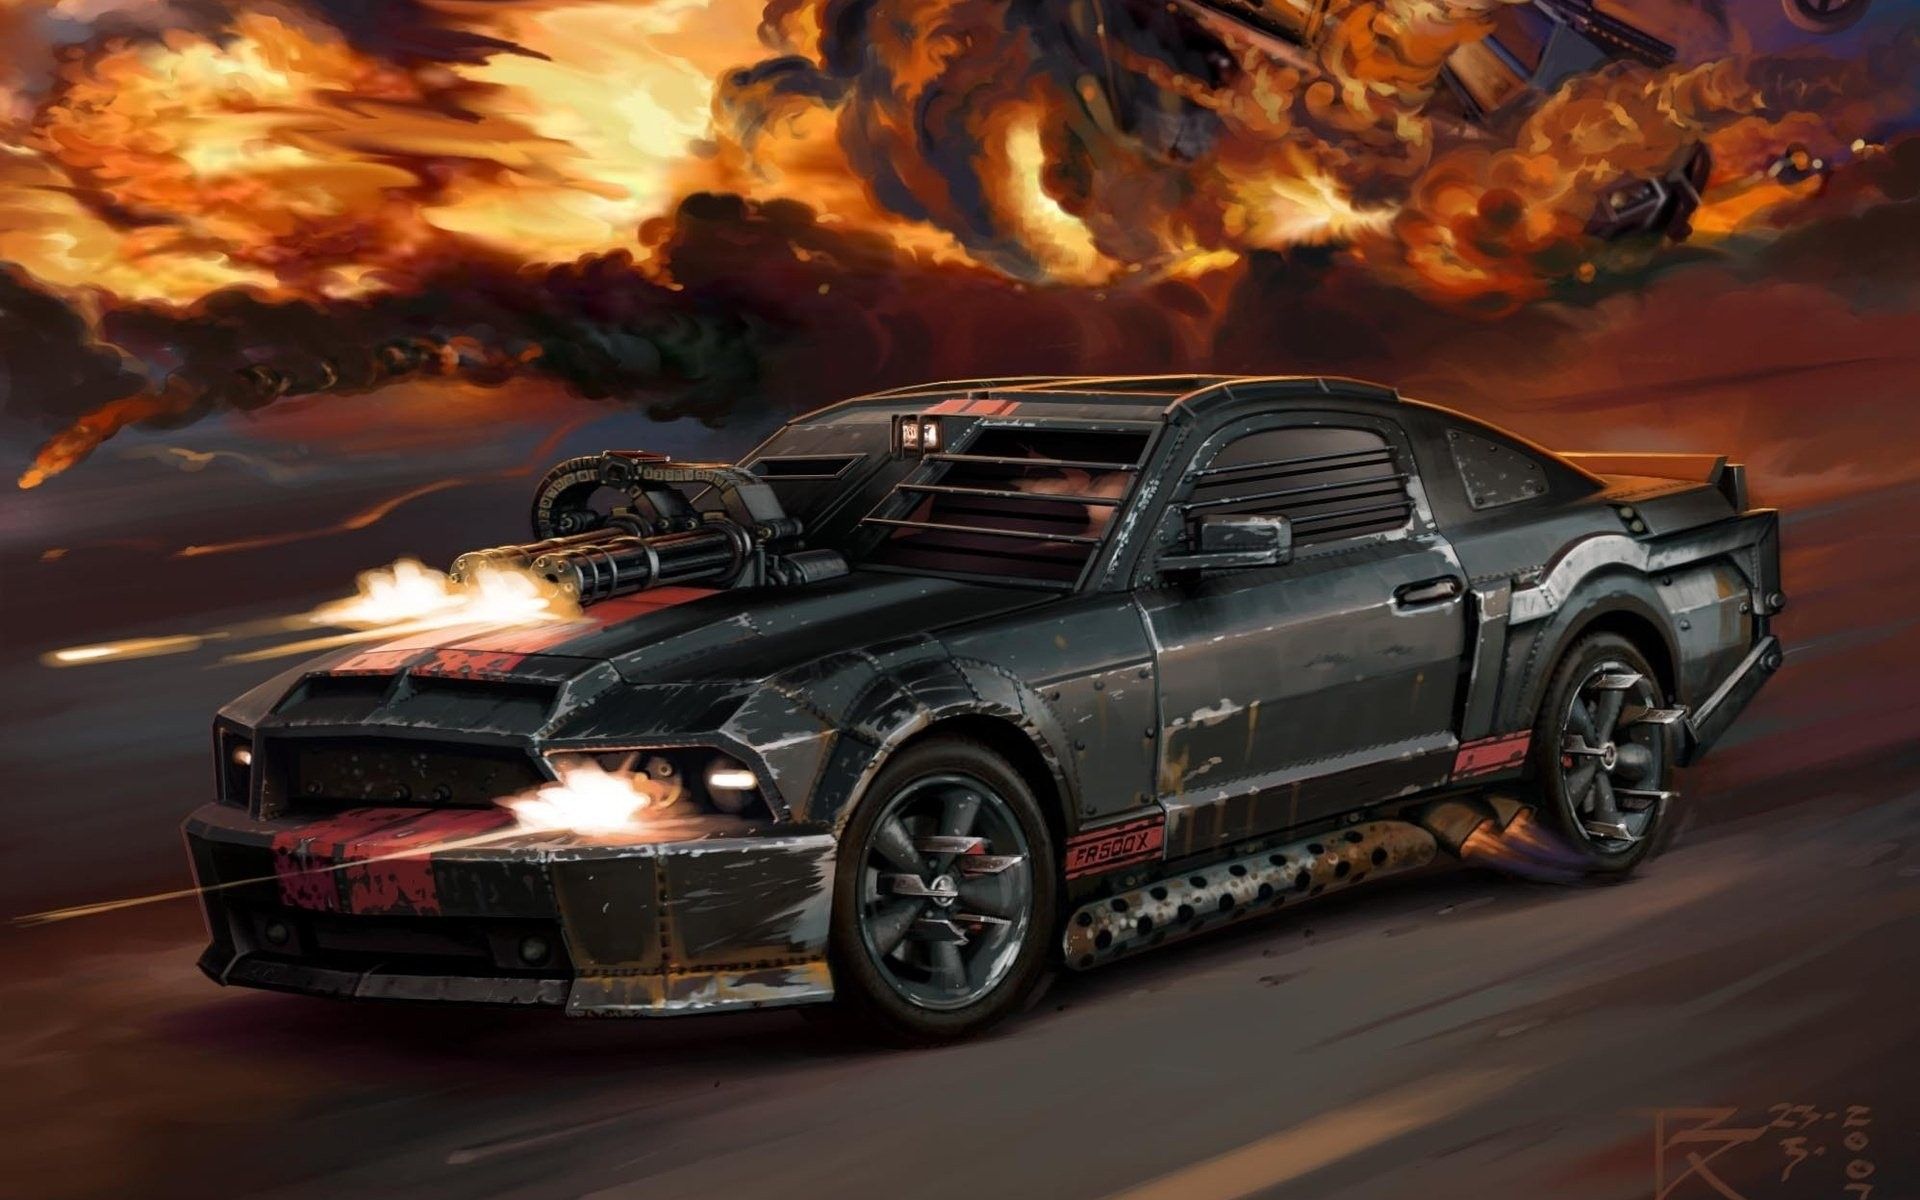 Black guns cars explosions digital art .wallpaperup.com